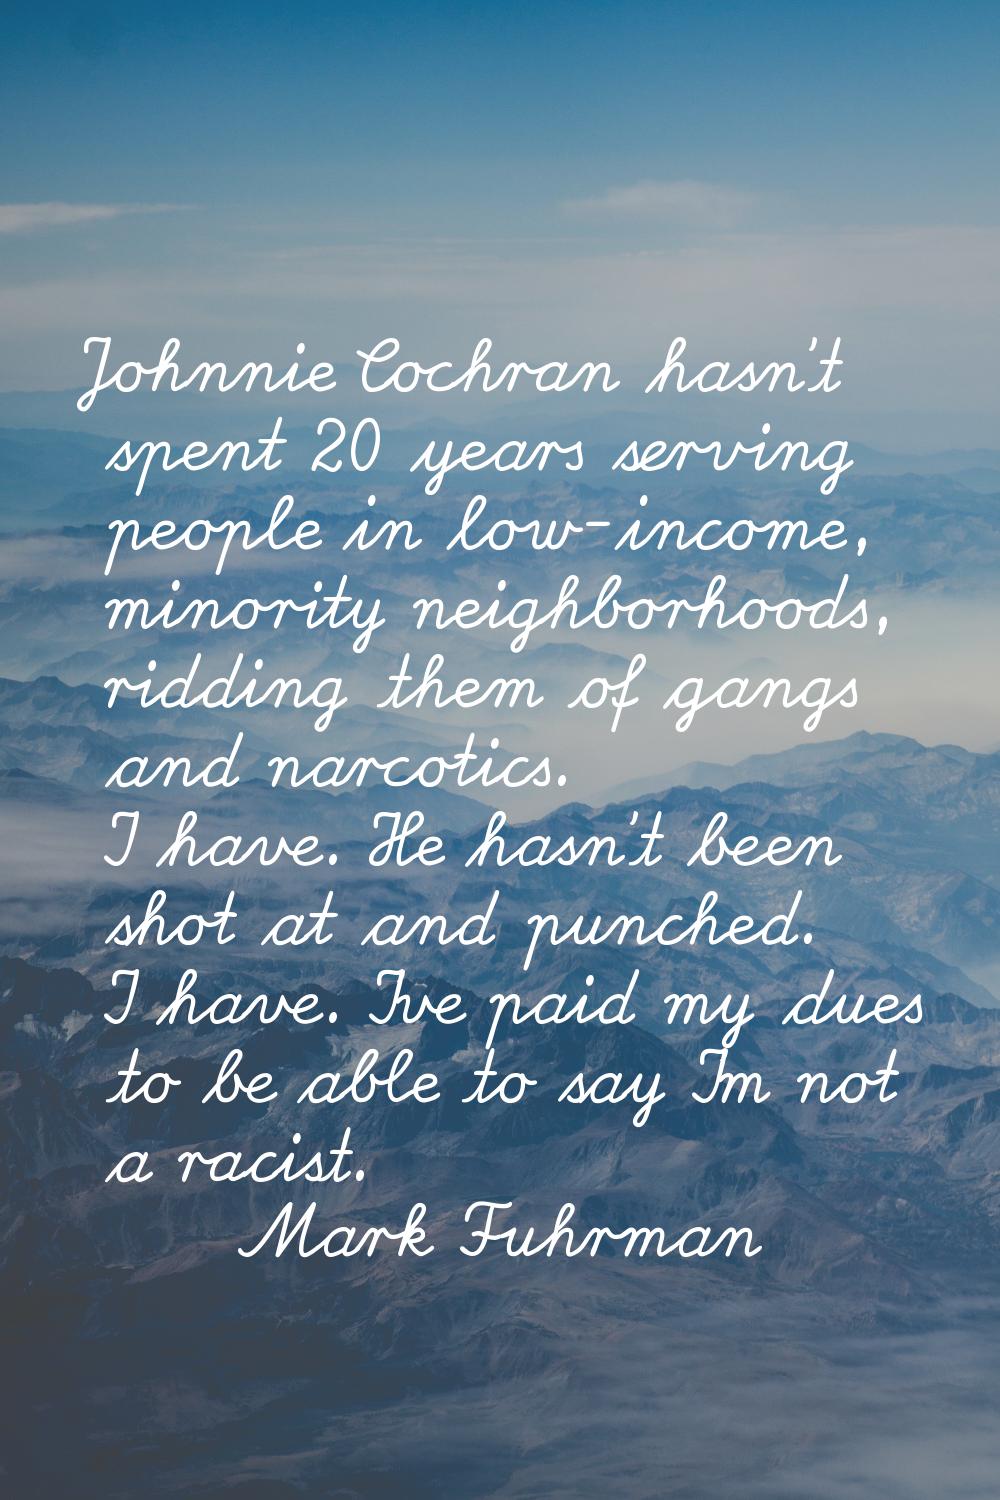 Johnnie Cochran hasn't spent 20 years serving people in low-income, minority neighborhoods, ridding